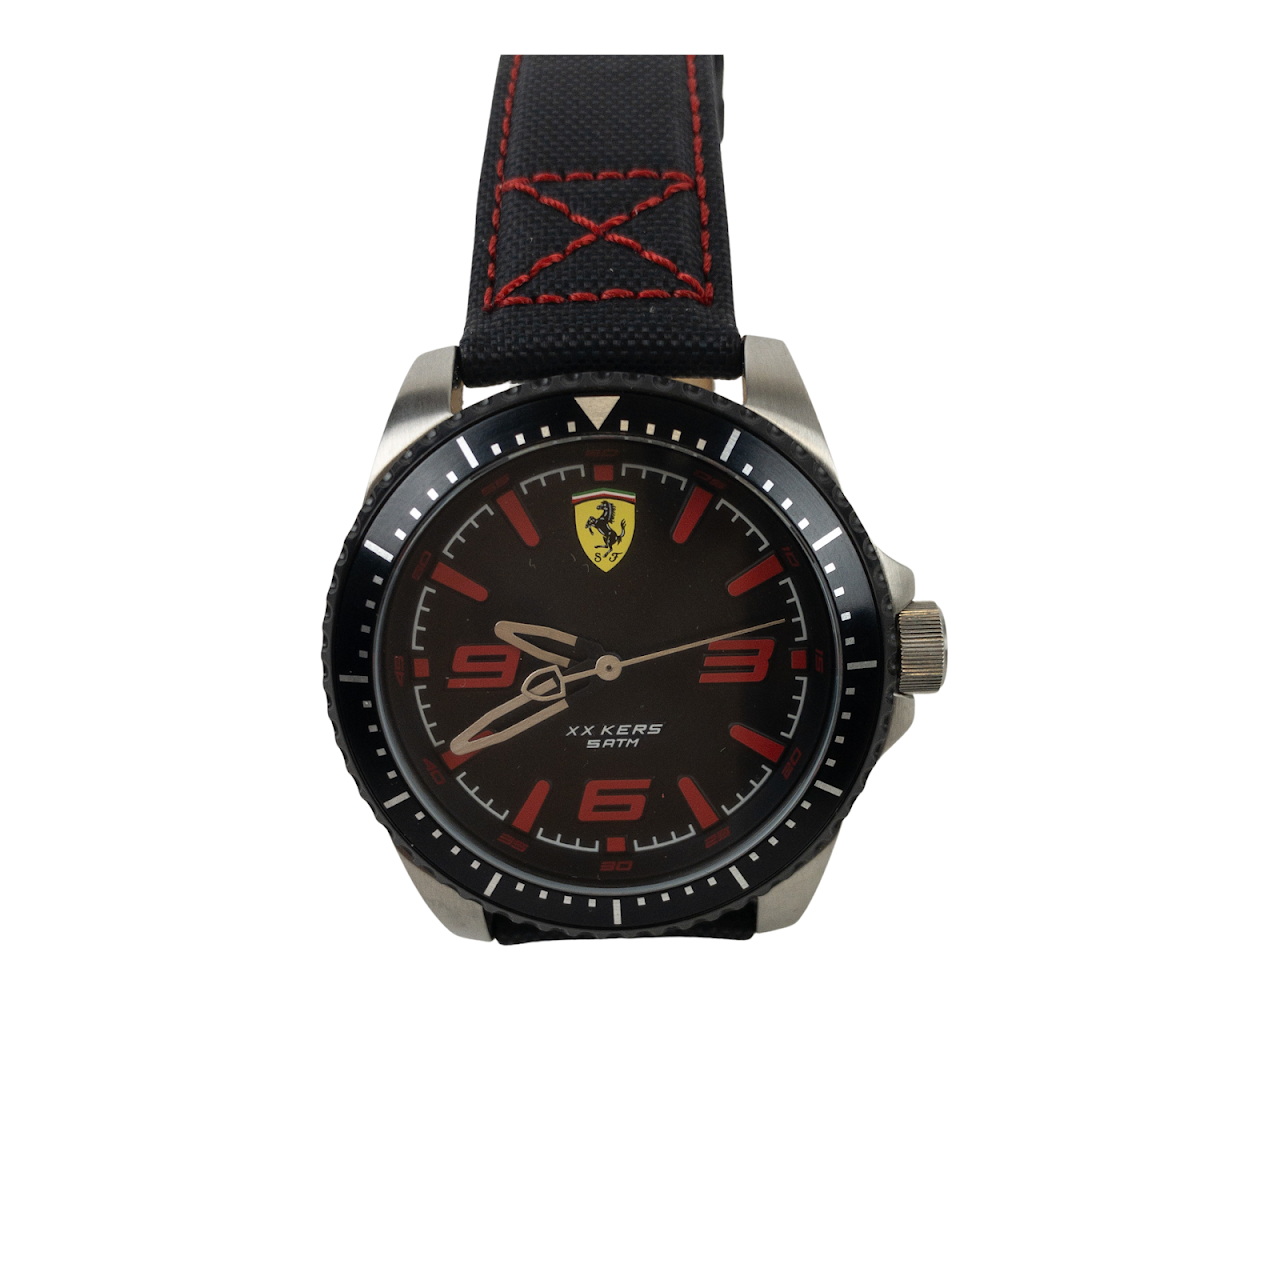 Ferrari XX Kers Watch